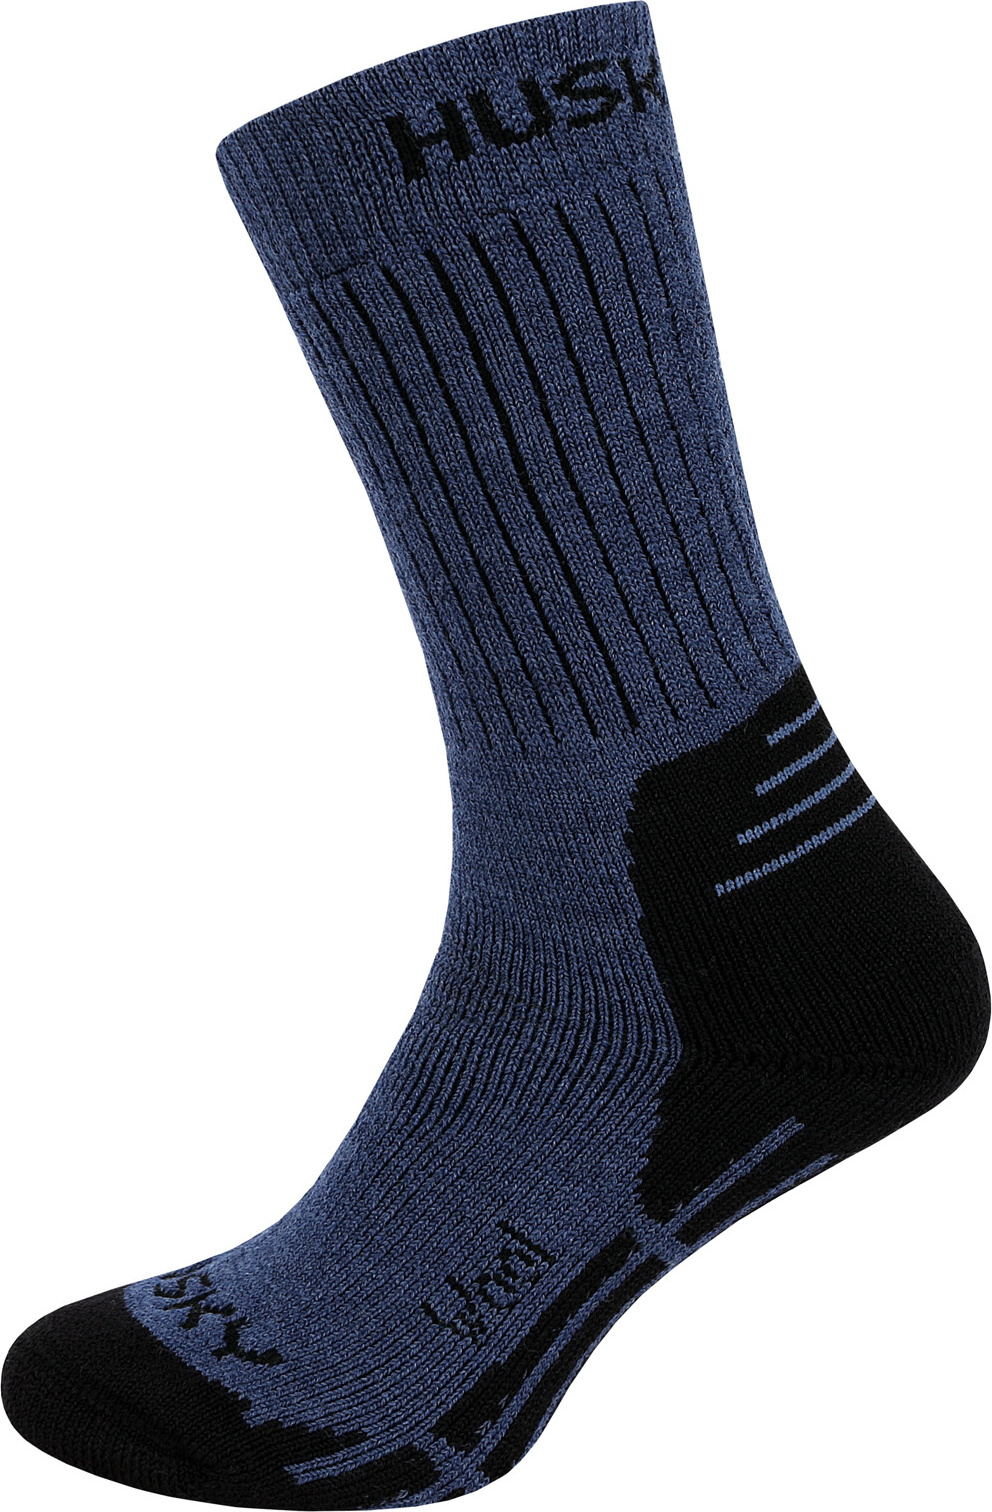 Ponožky HUSKY All Wool modrá + Sleva 5% - zadej v košíku kód: SLEVA5 Velikost: XL (45-48)